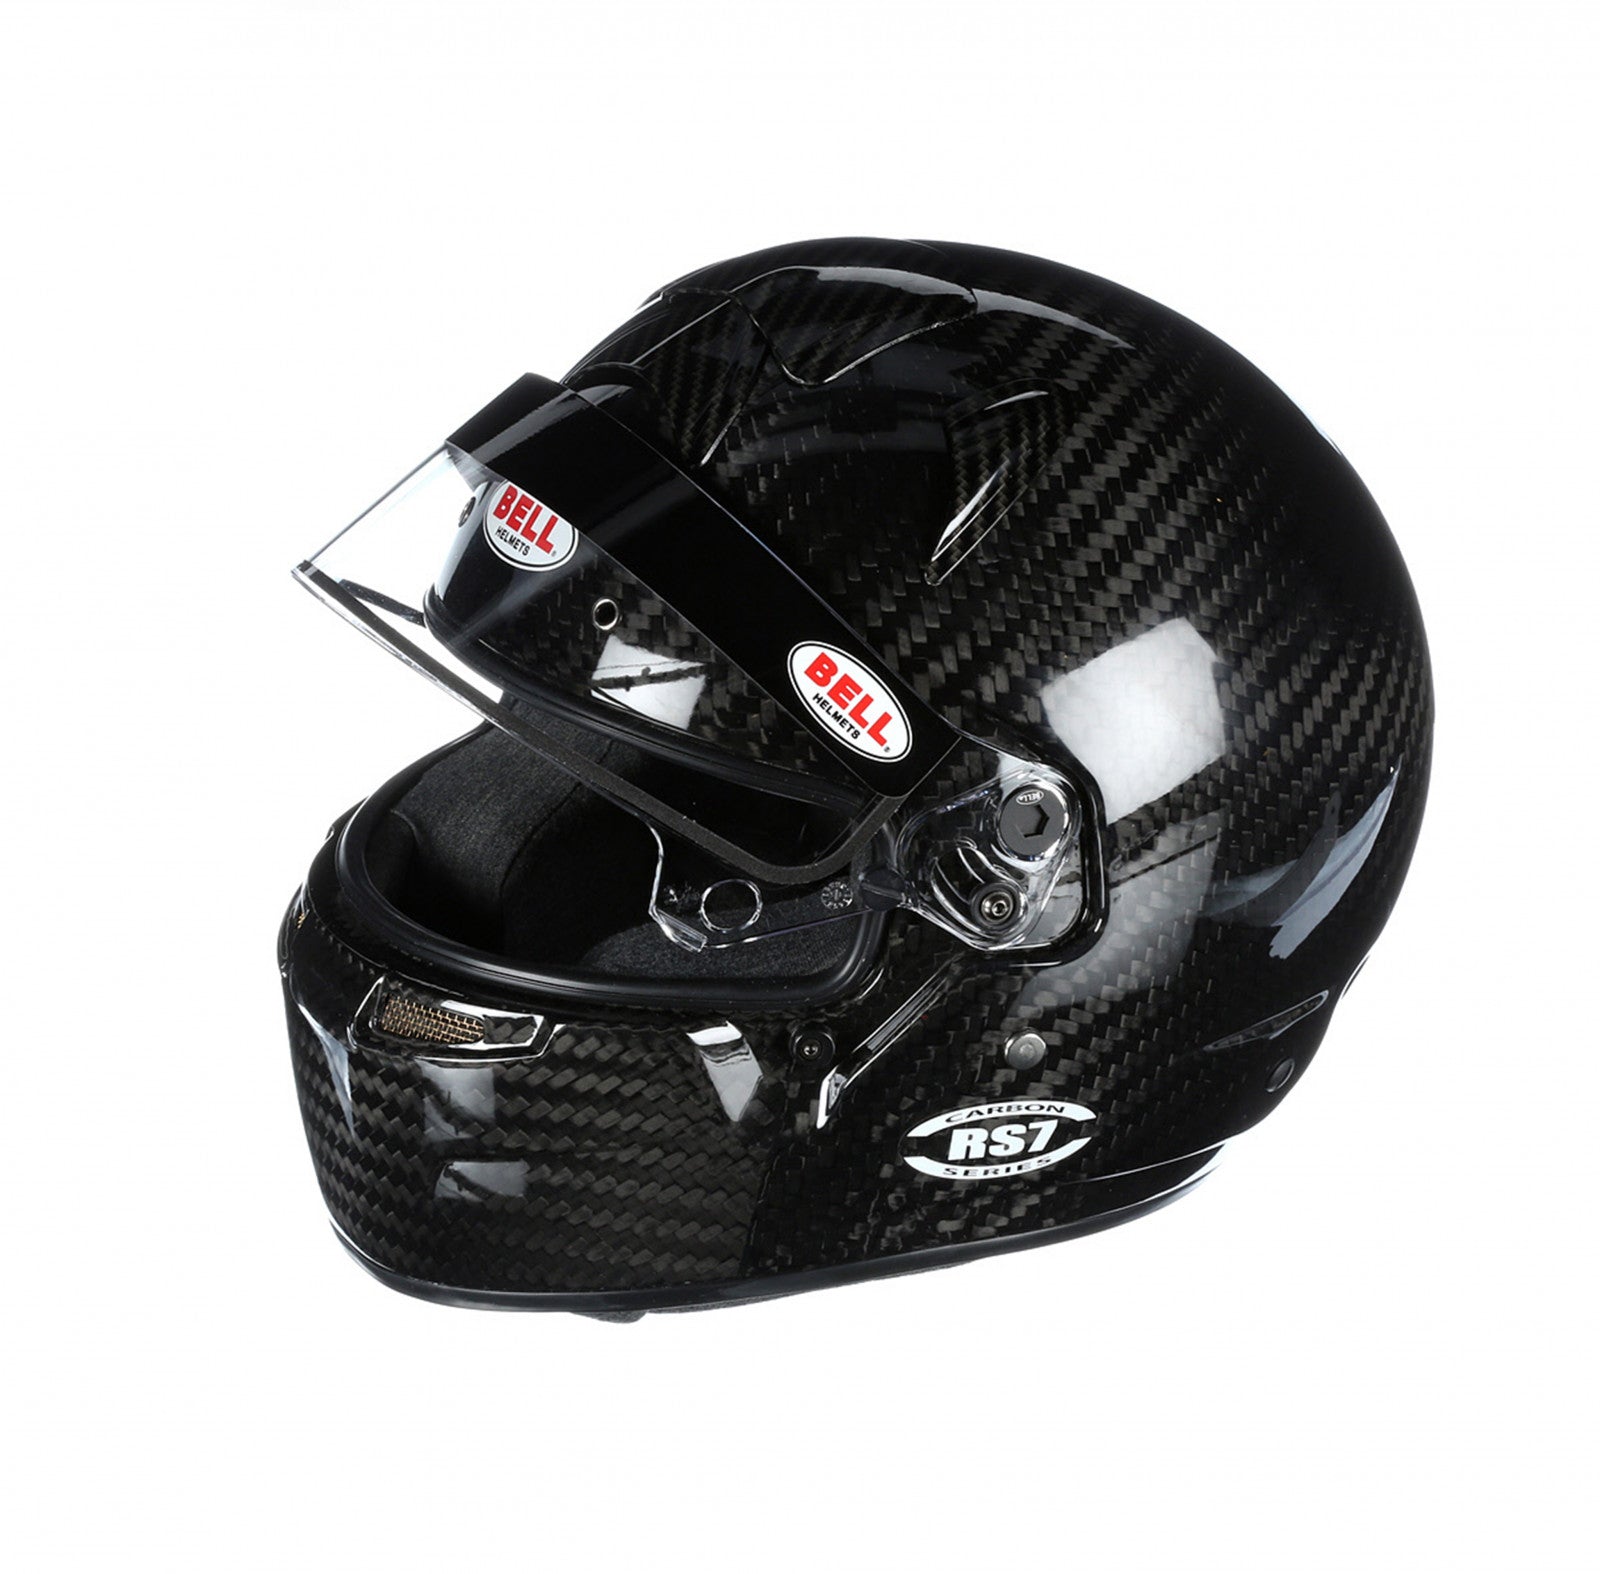 Bell RS7 Carbon Helmet Size 57 cm